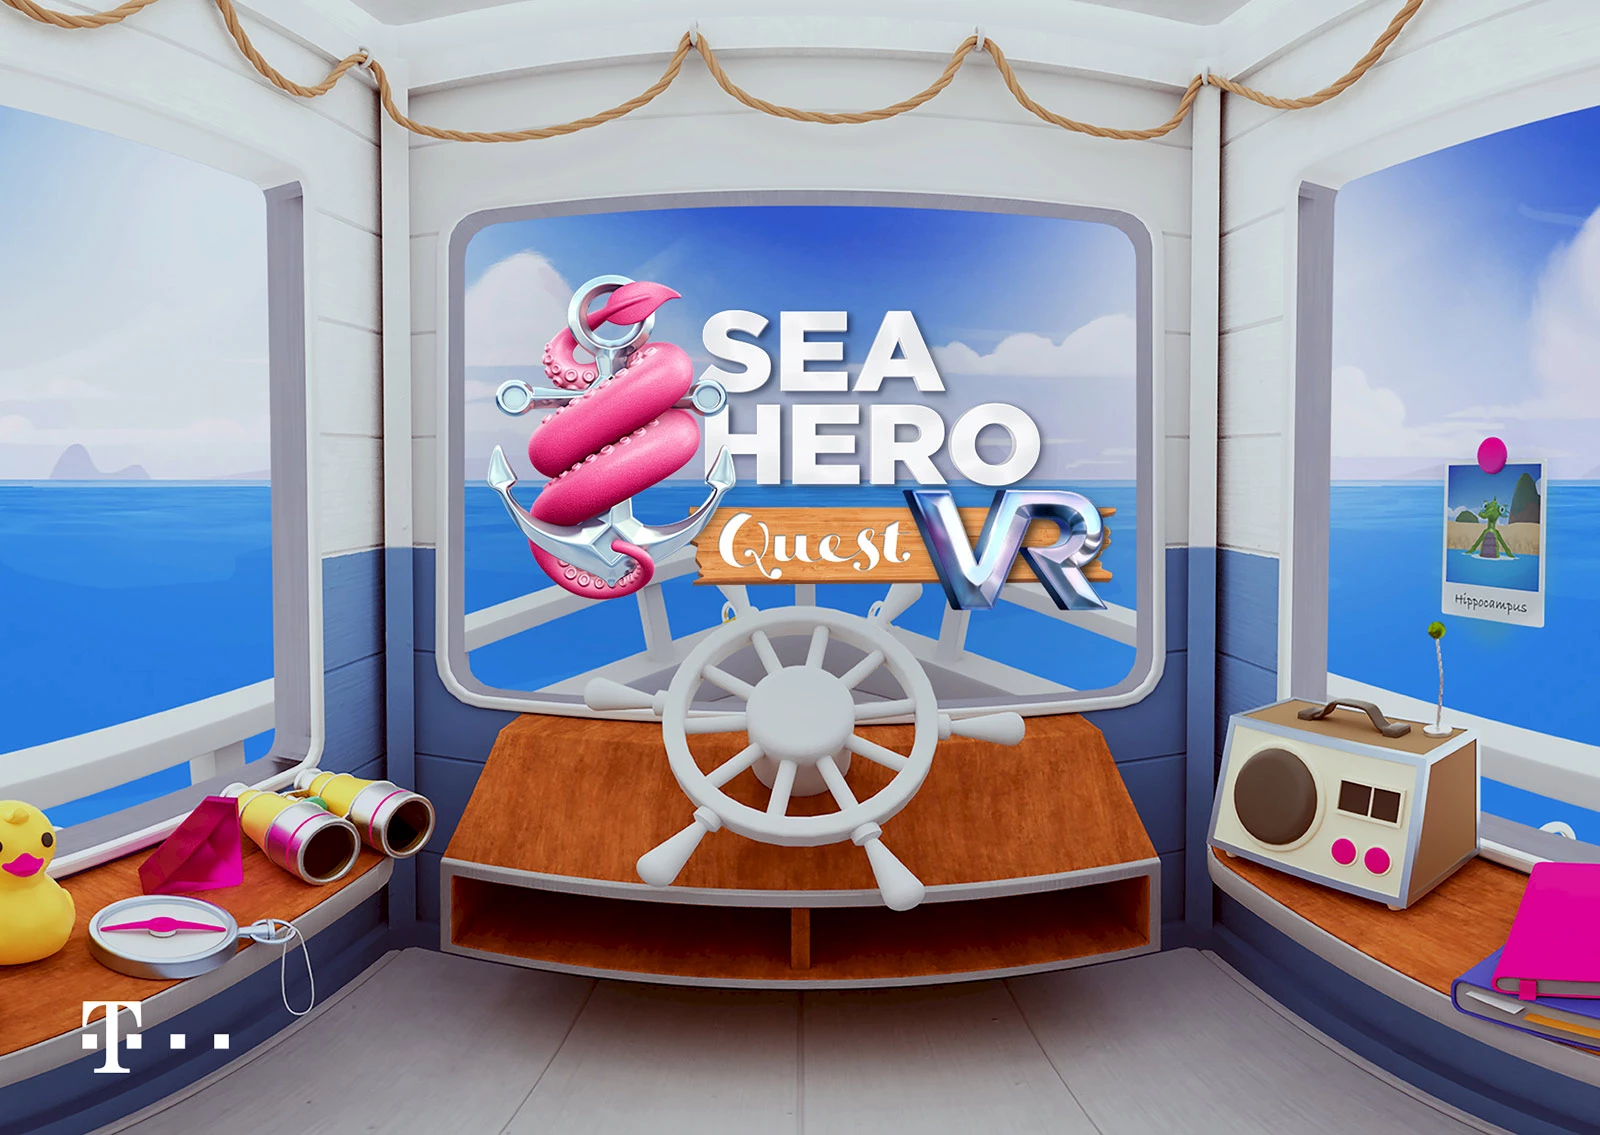 Sea Hero Quest.